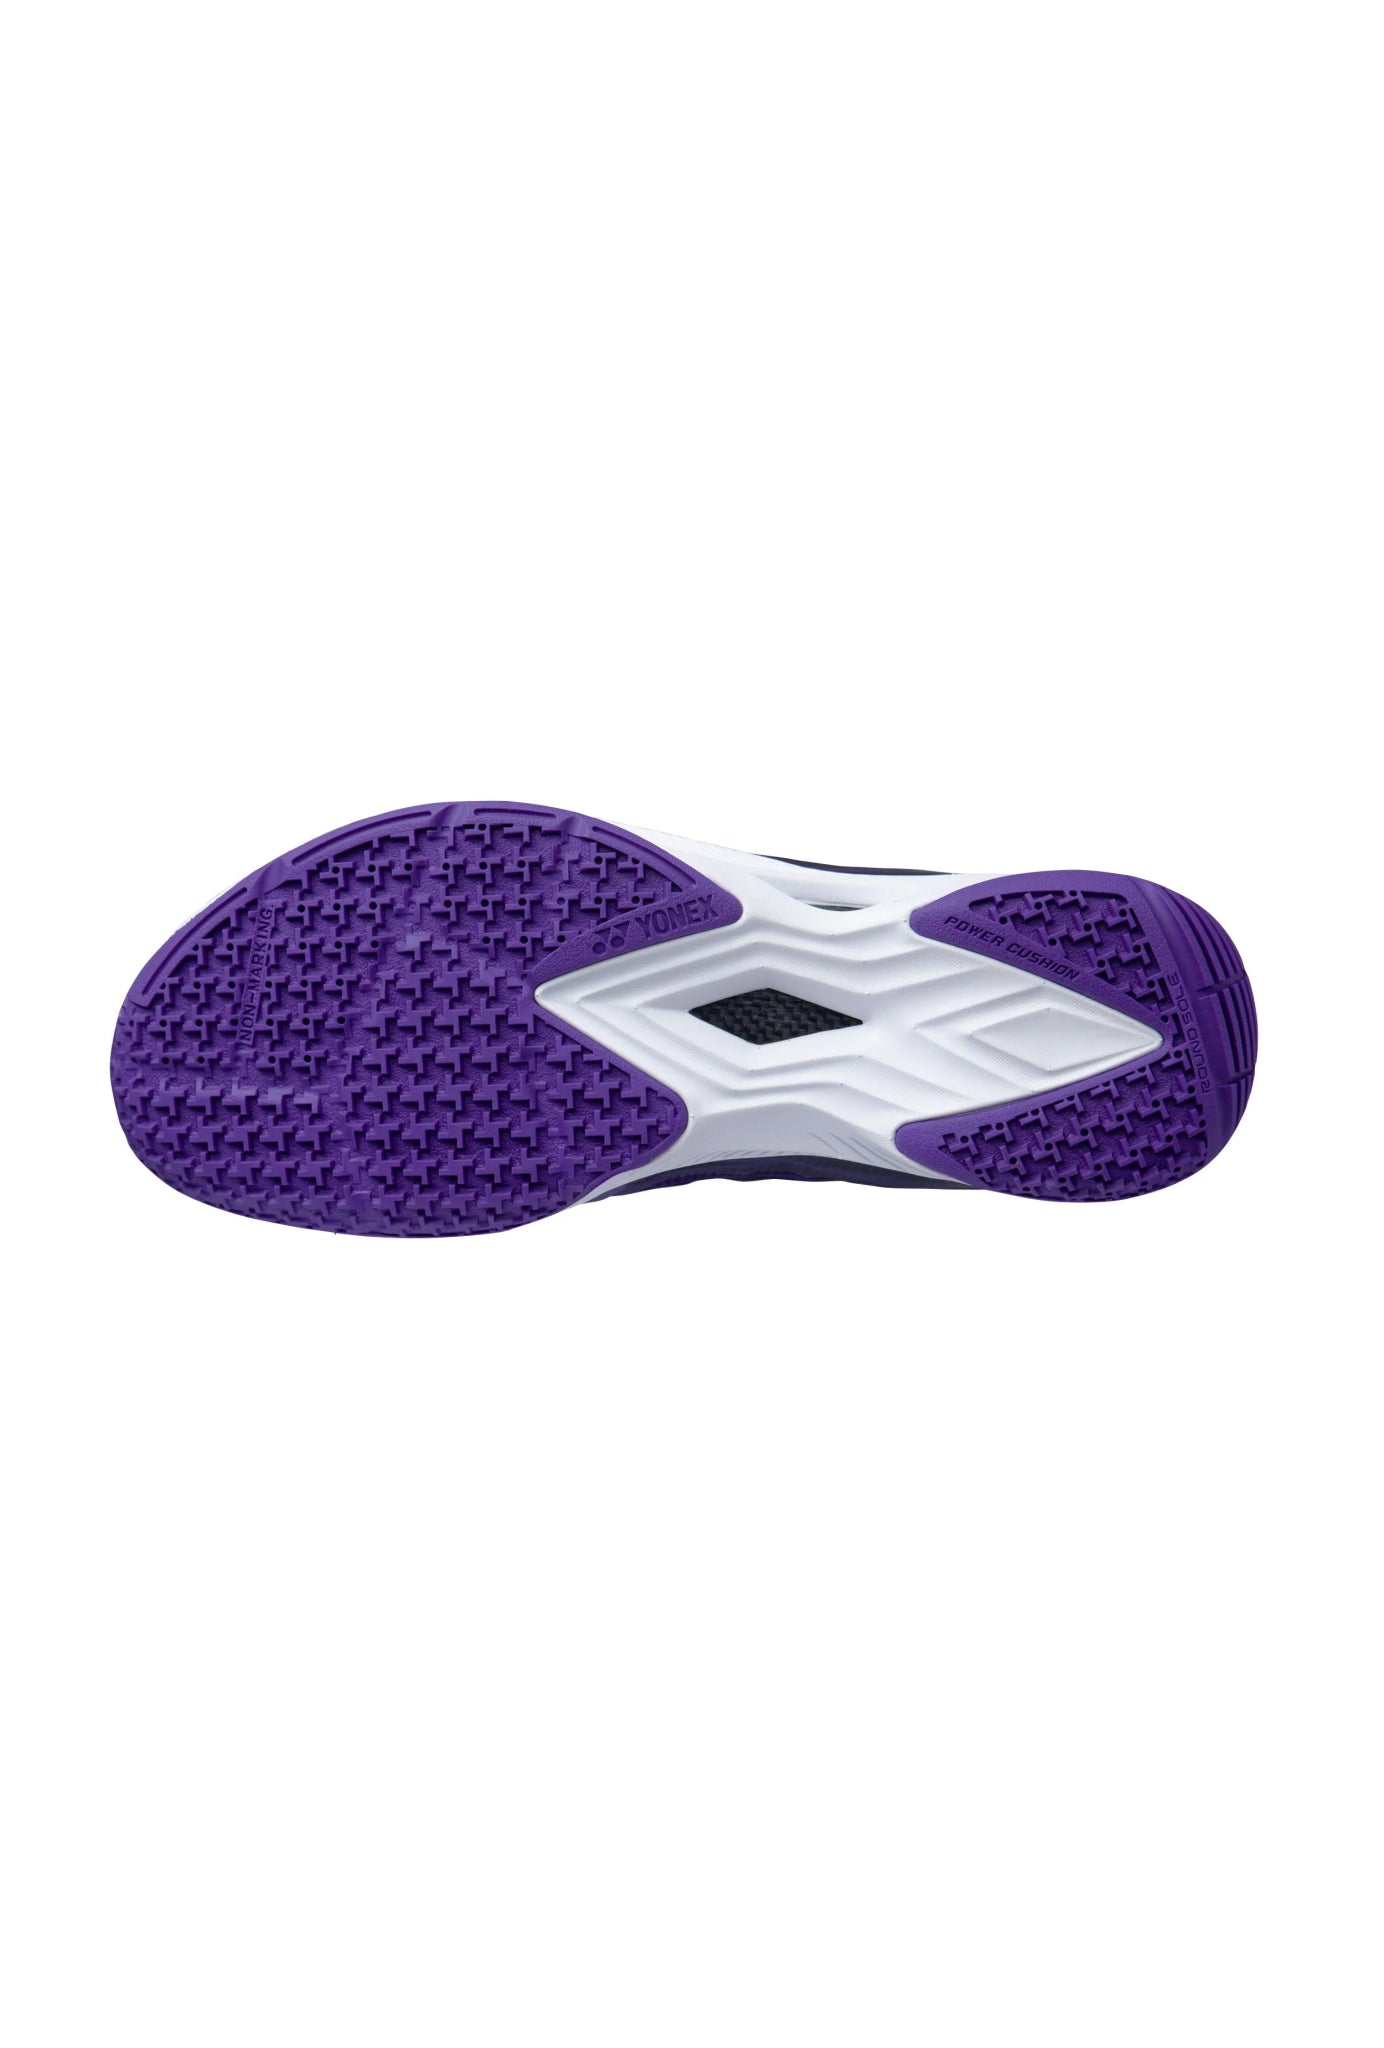 Yonex Badminton Shoe Power Cushion Aerus Z2 Women (Grape) - Nexus Badminton